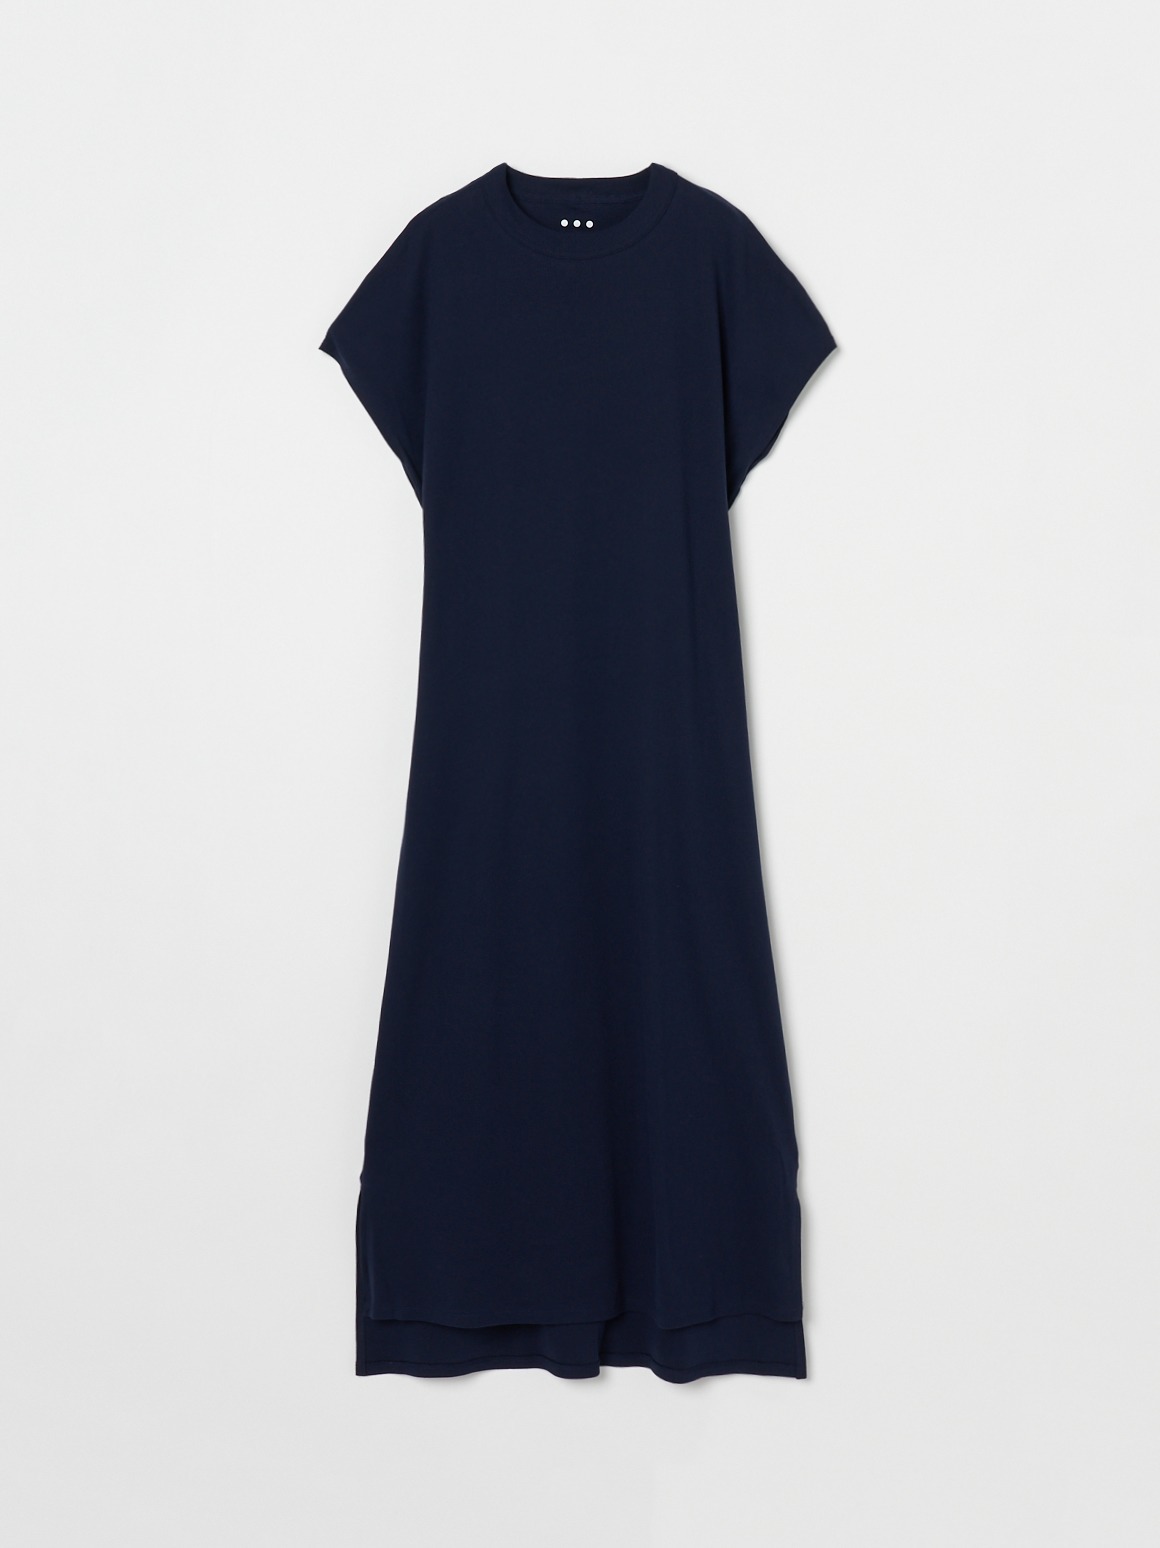 x RIKACO Organic cotton knit Tshirt dress 詳細画像 navy 1